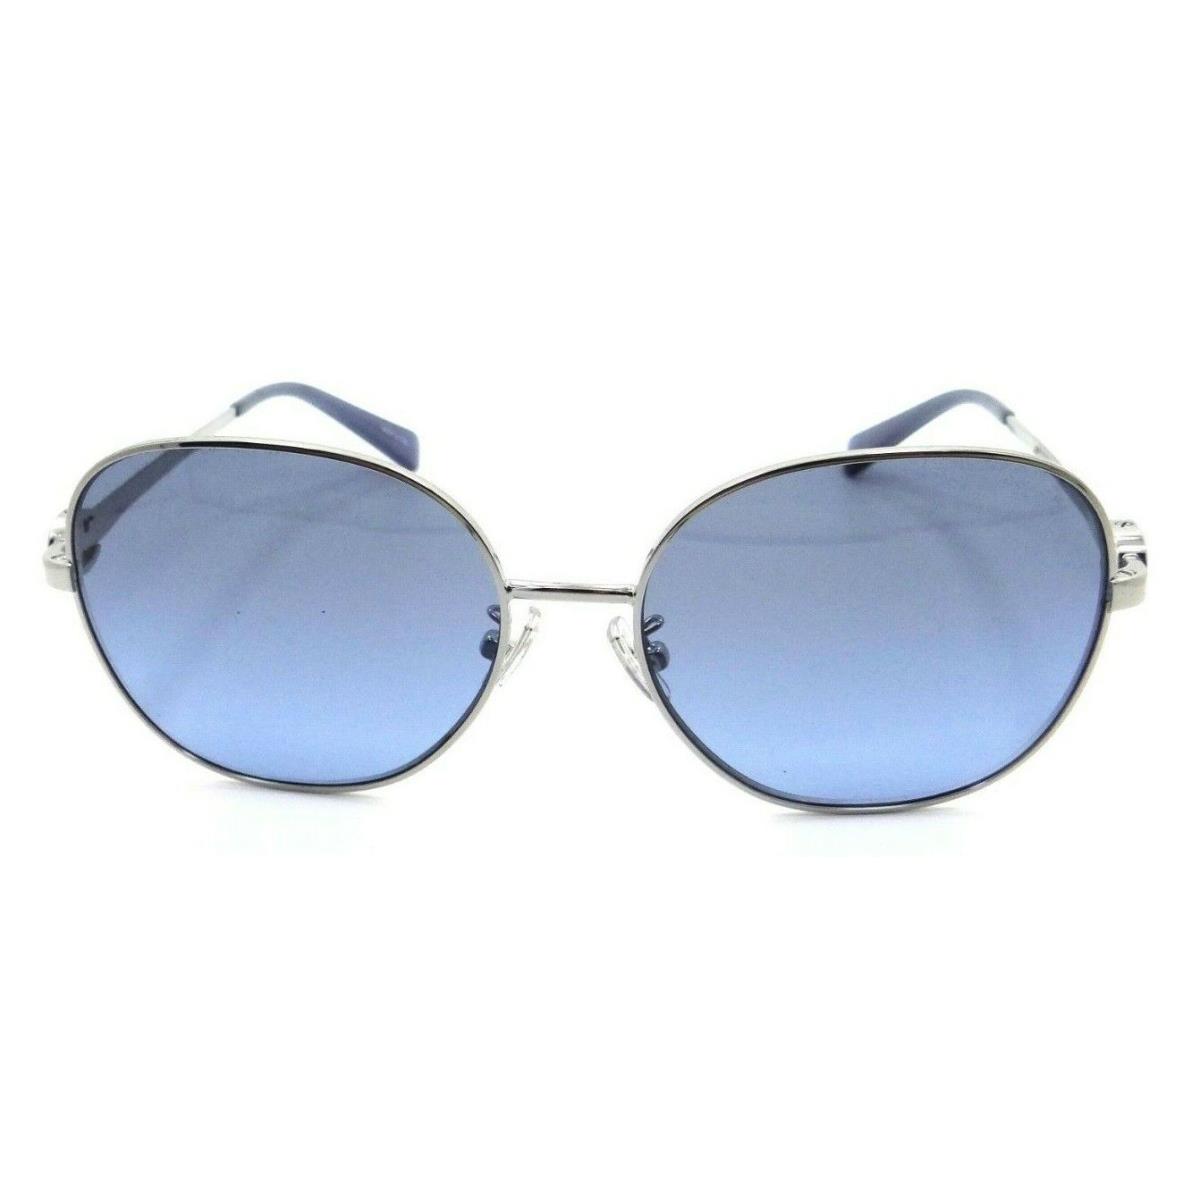 Coach sunglasses  - Multicolor Frame